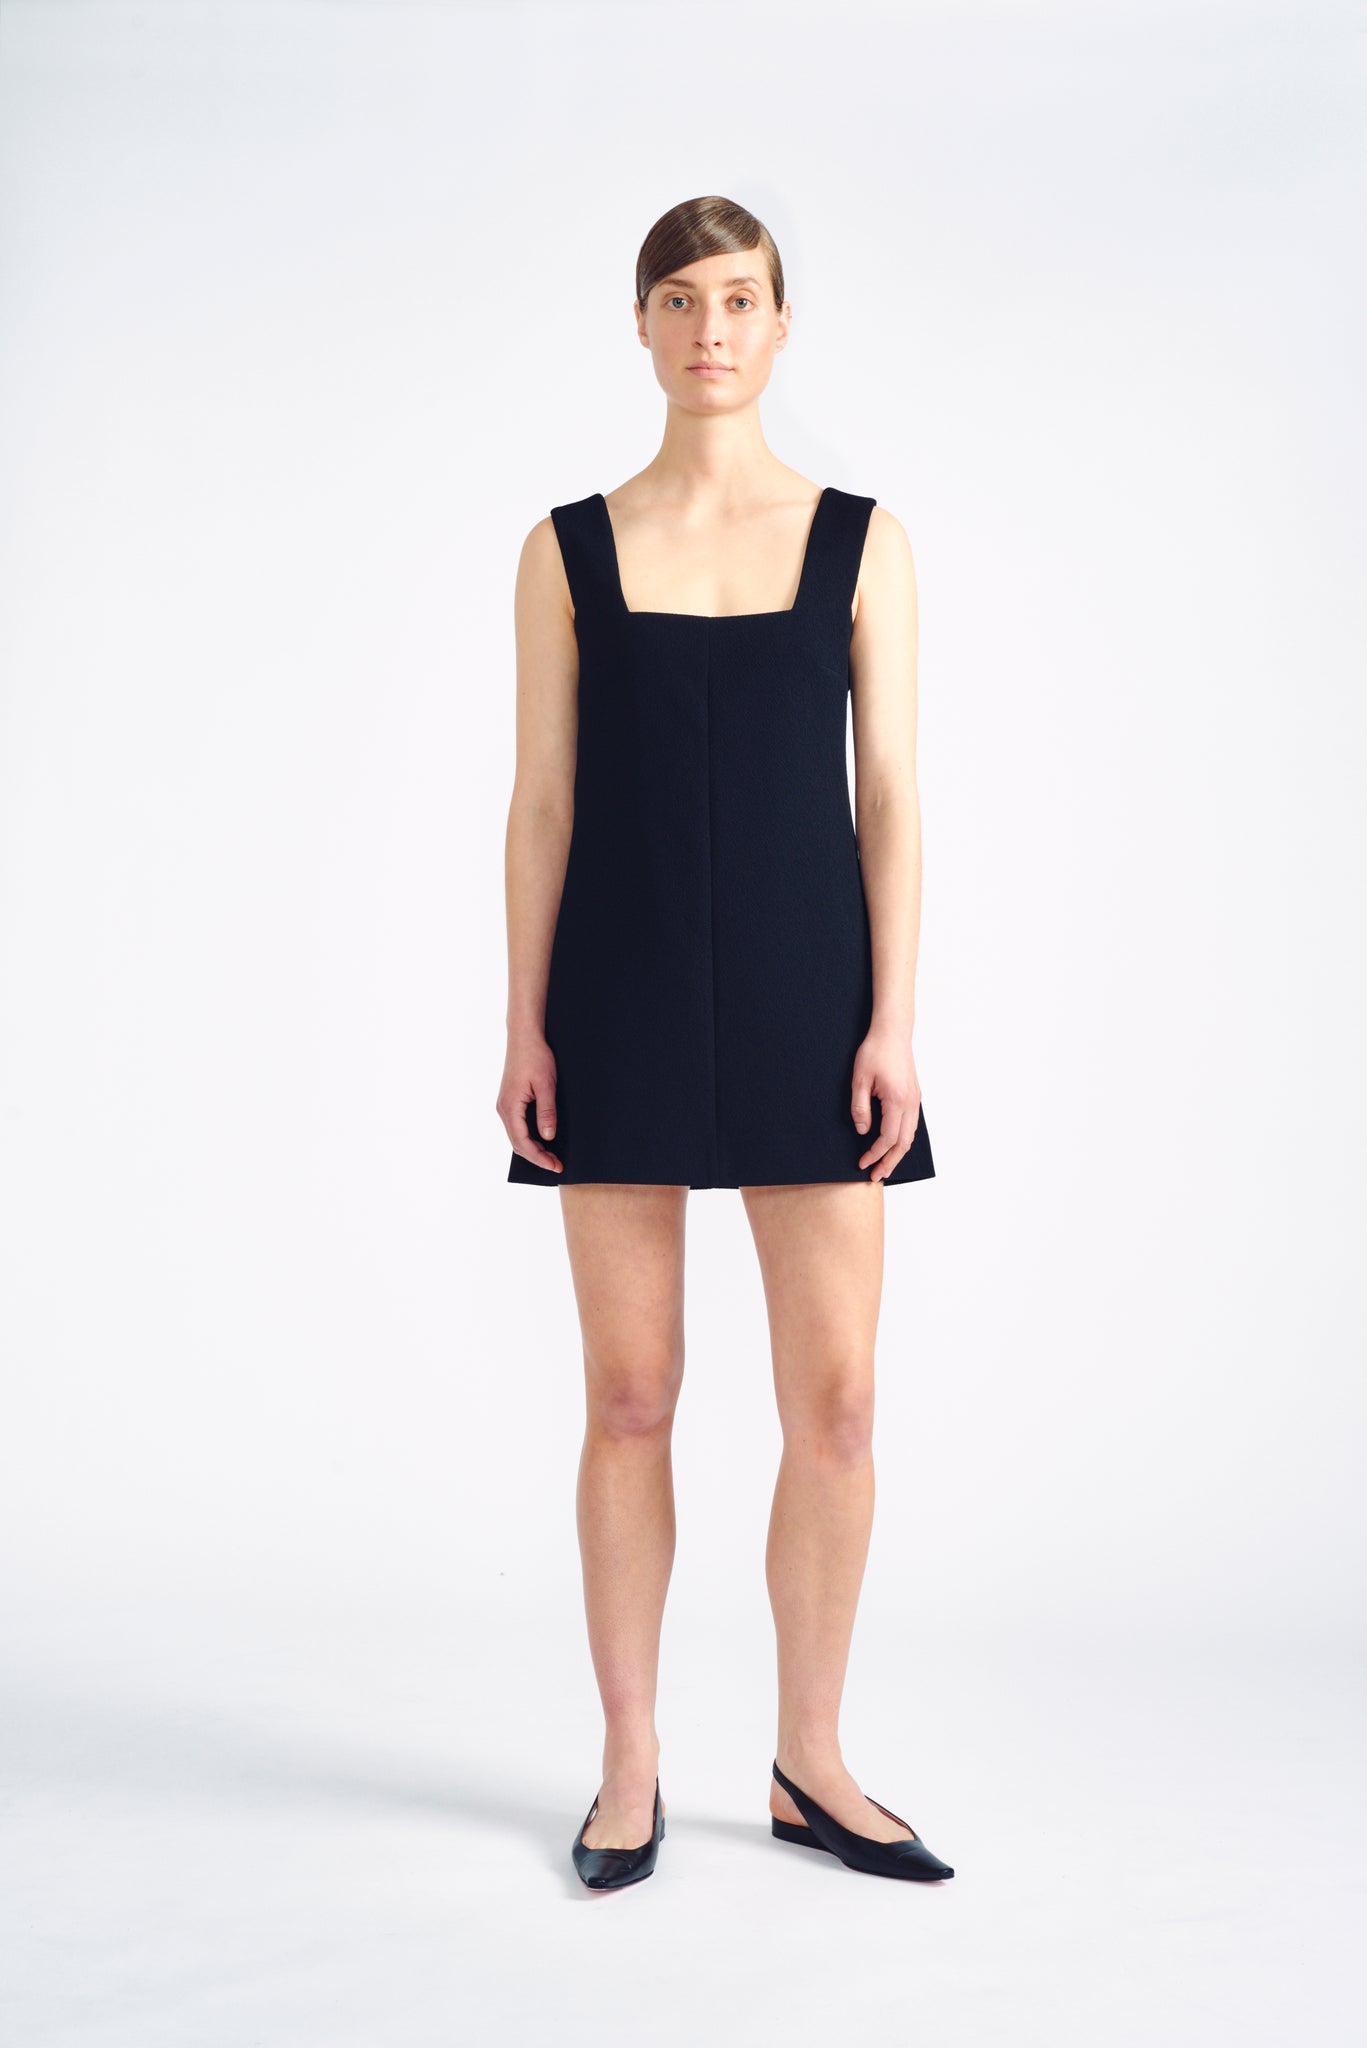 Analiese Top | Black Sleeveless Tunic Dress Top | Emilia Wickstead